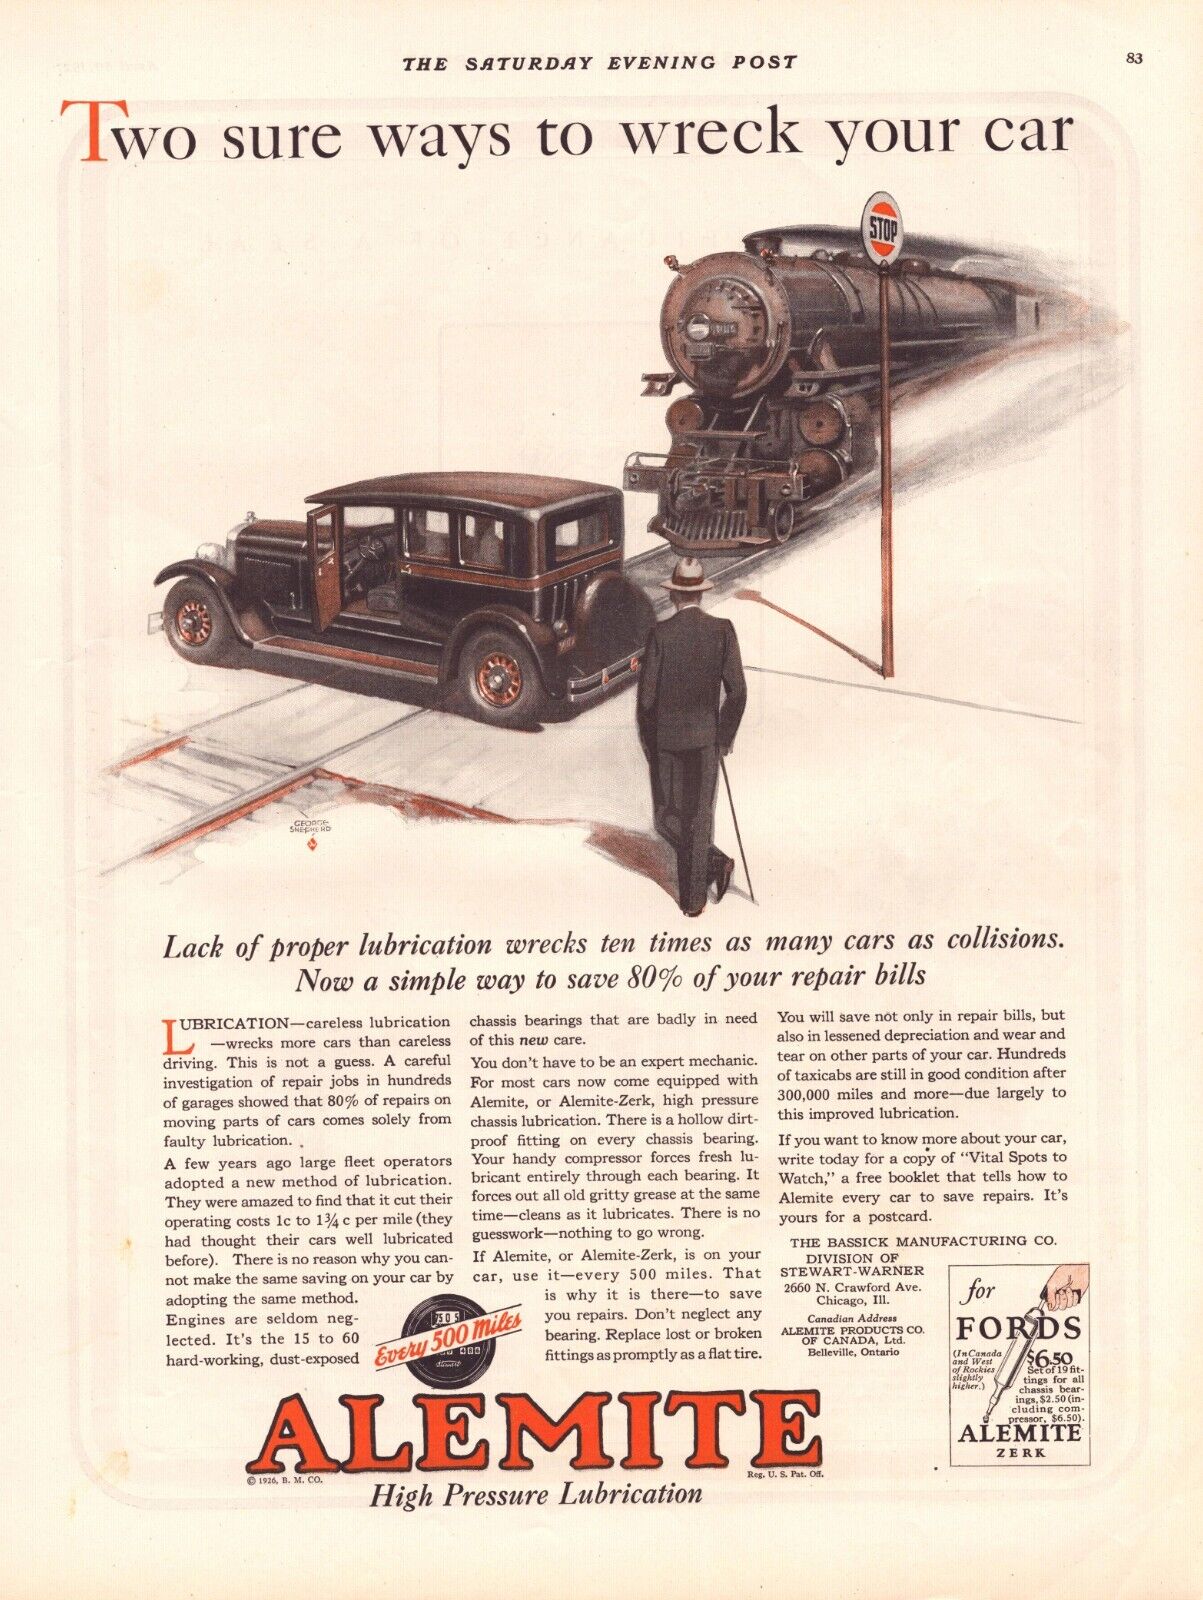 1927 Alemite High Pressure Lubrication Oil For Fords Train Car Crash